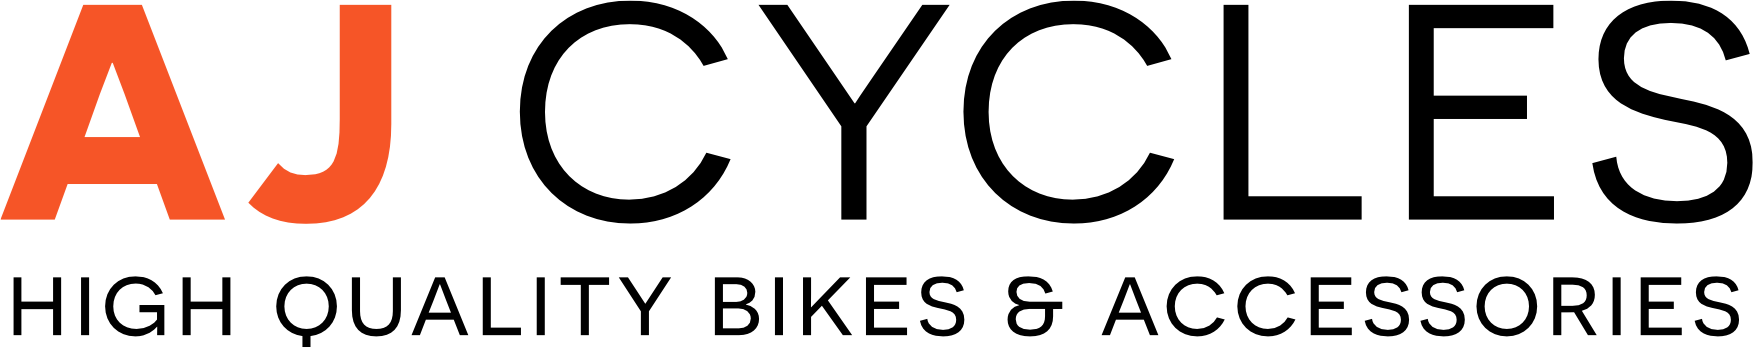 ajcycles logo